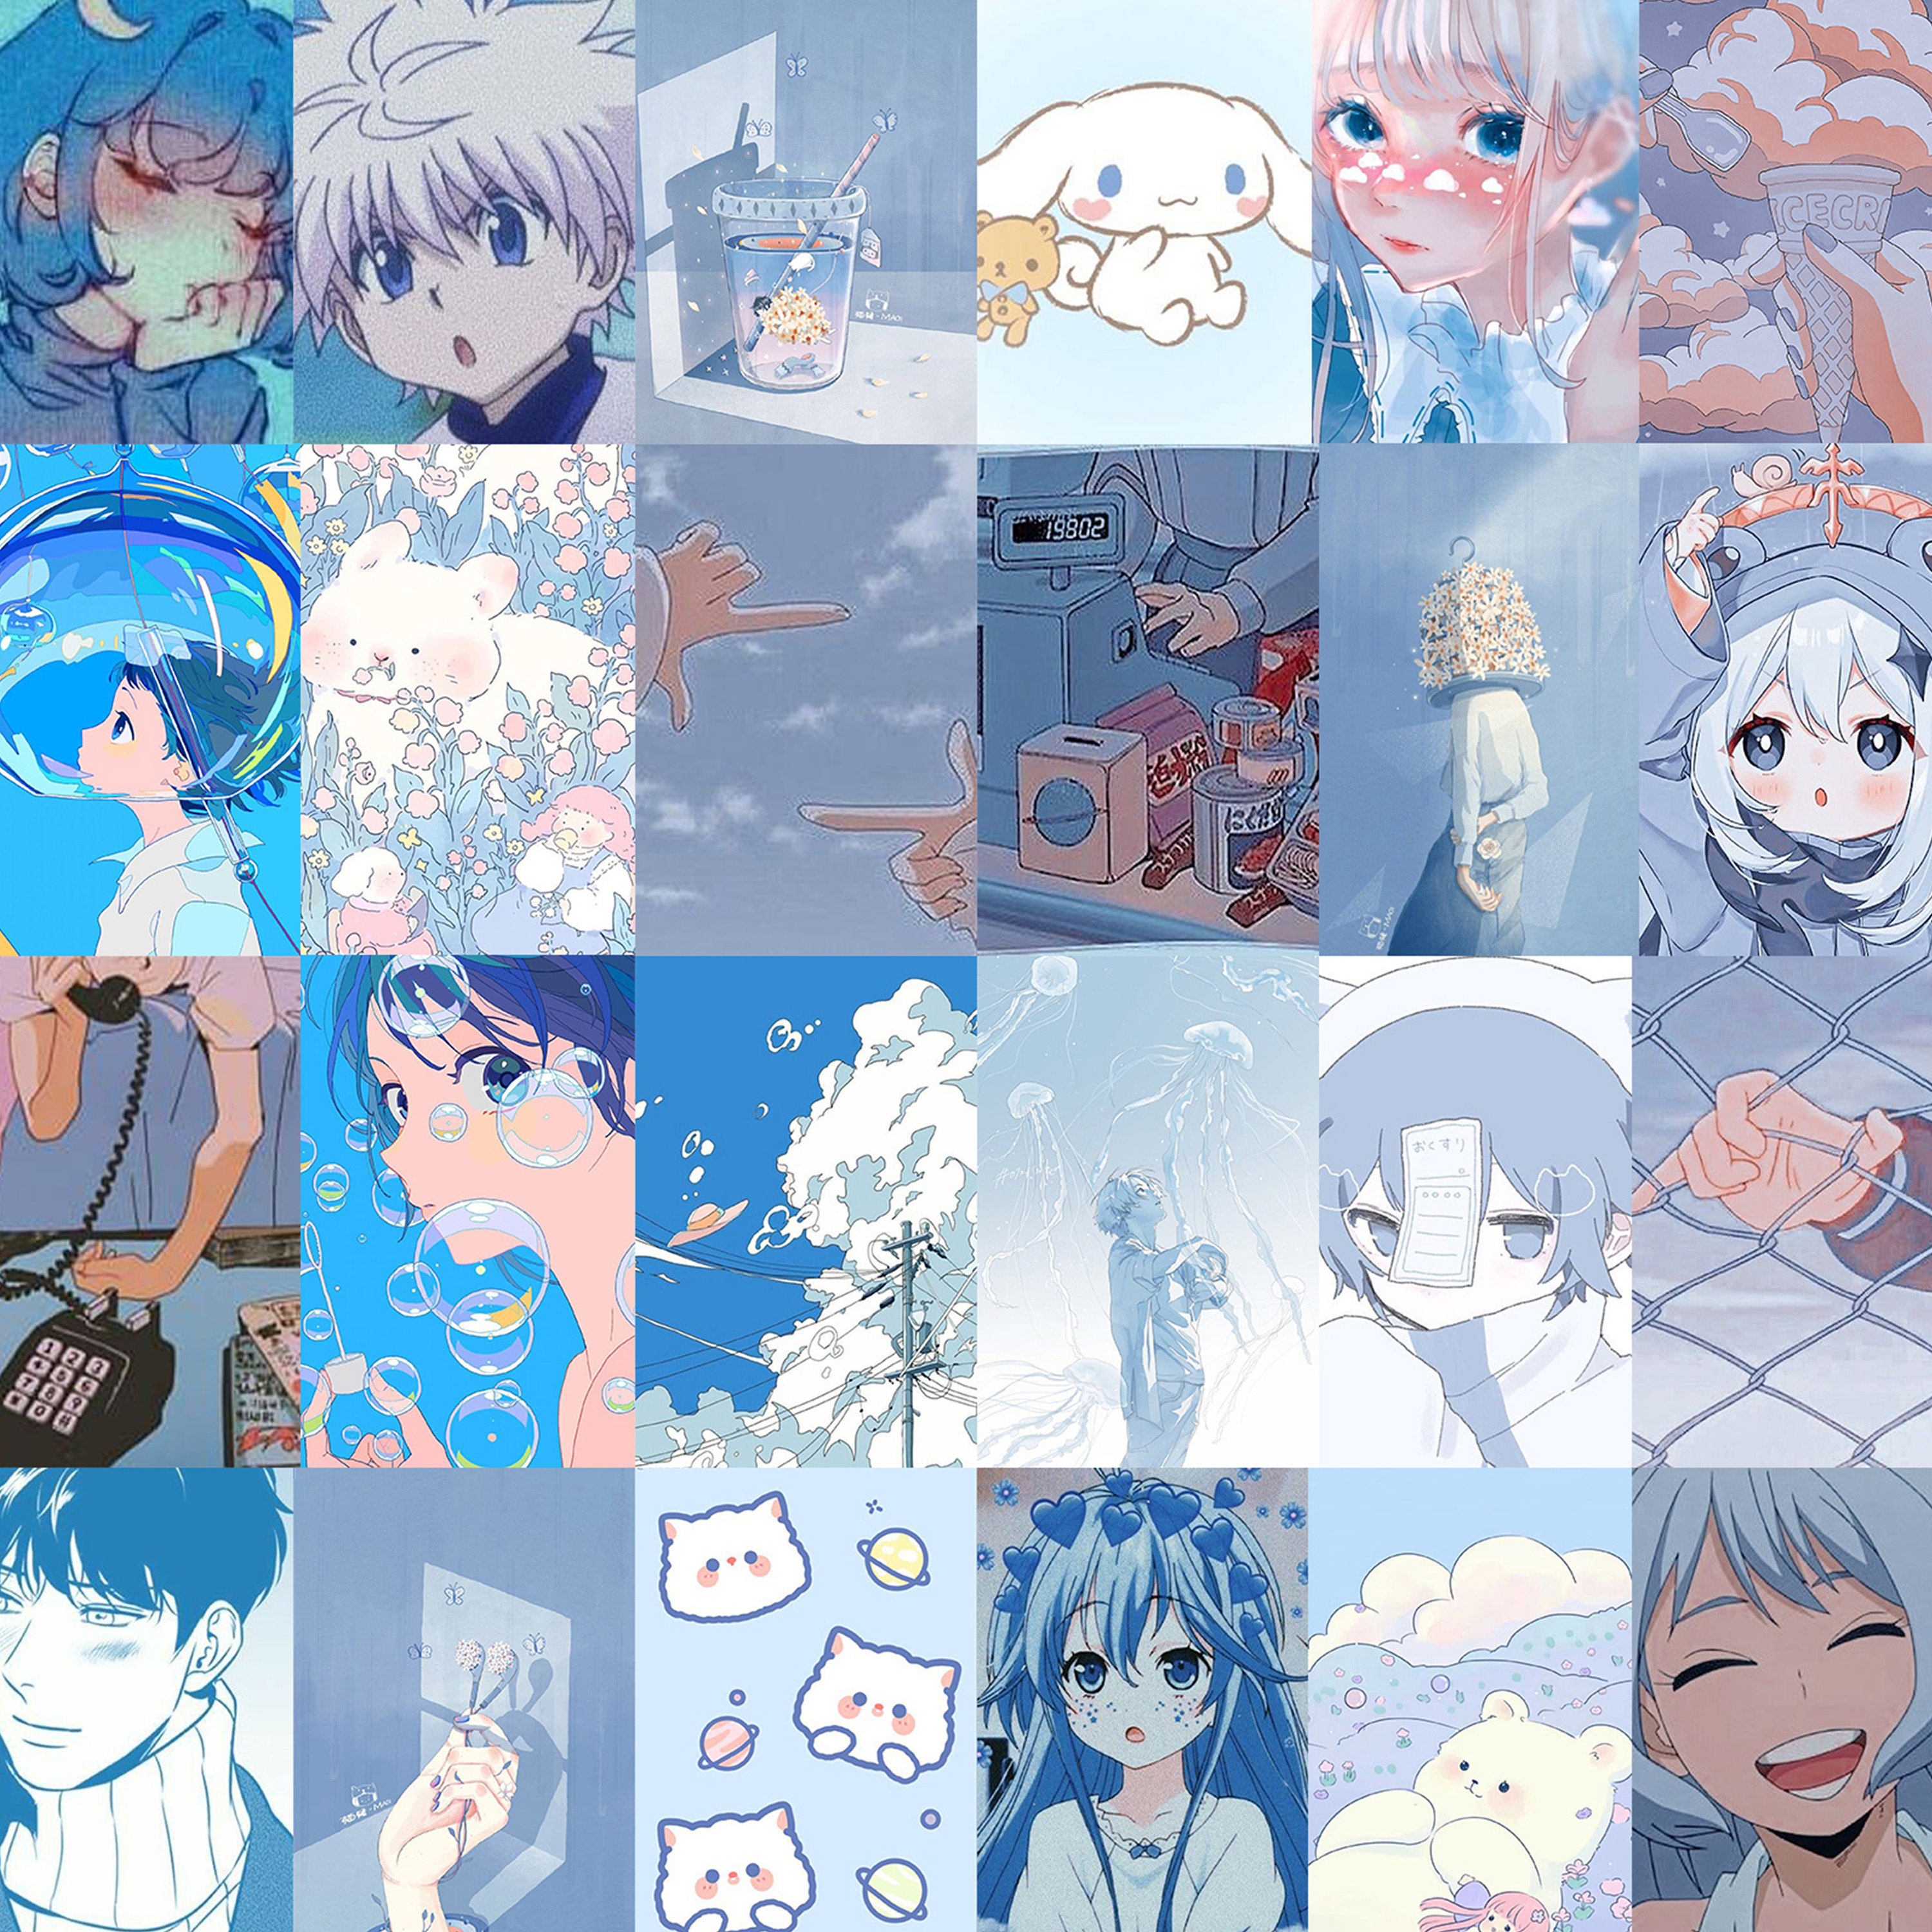  MeleBase Anime Wall Collage Kit Aesthetic 60 PCS Anime